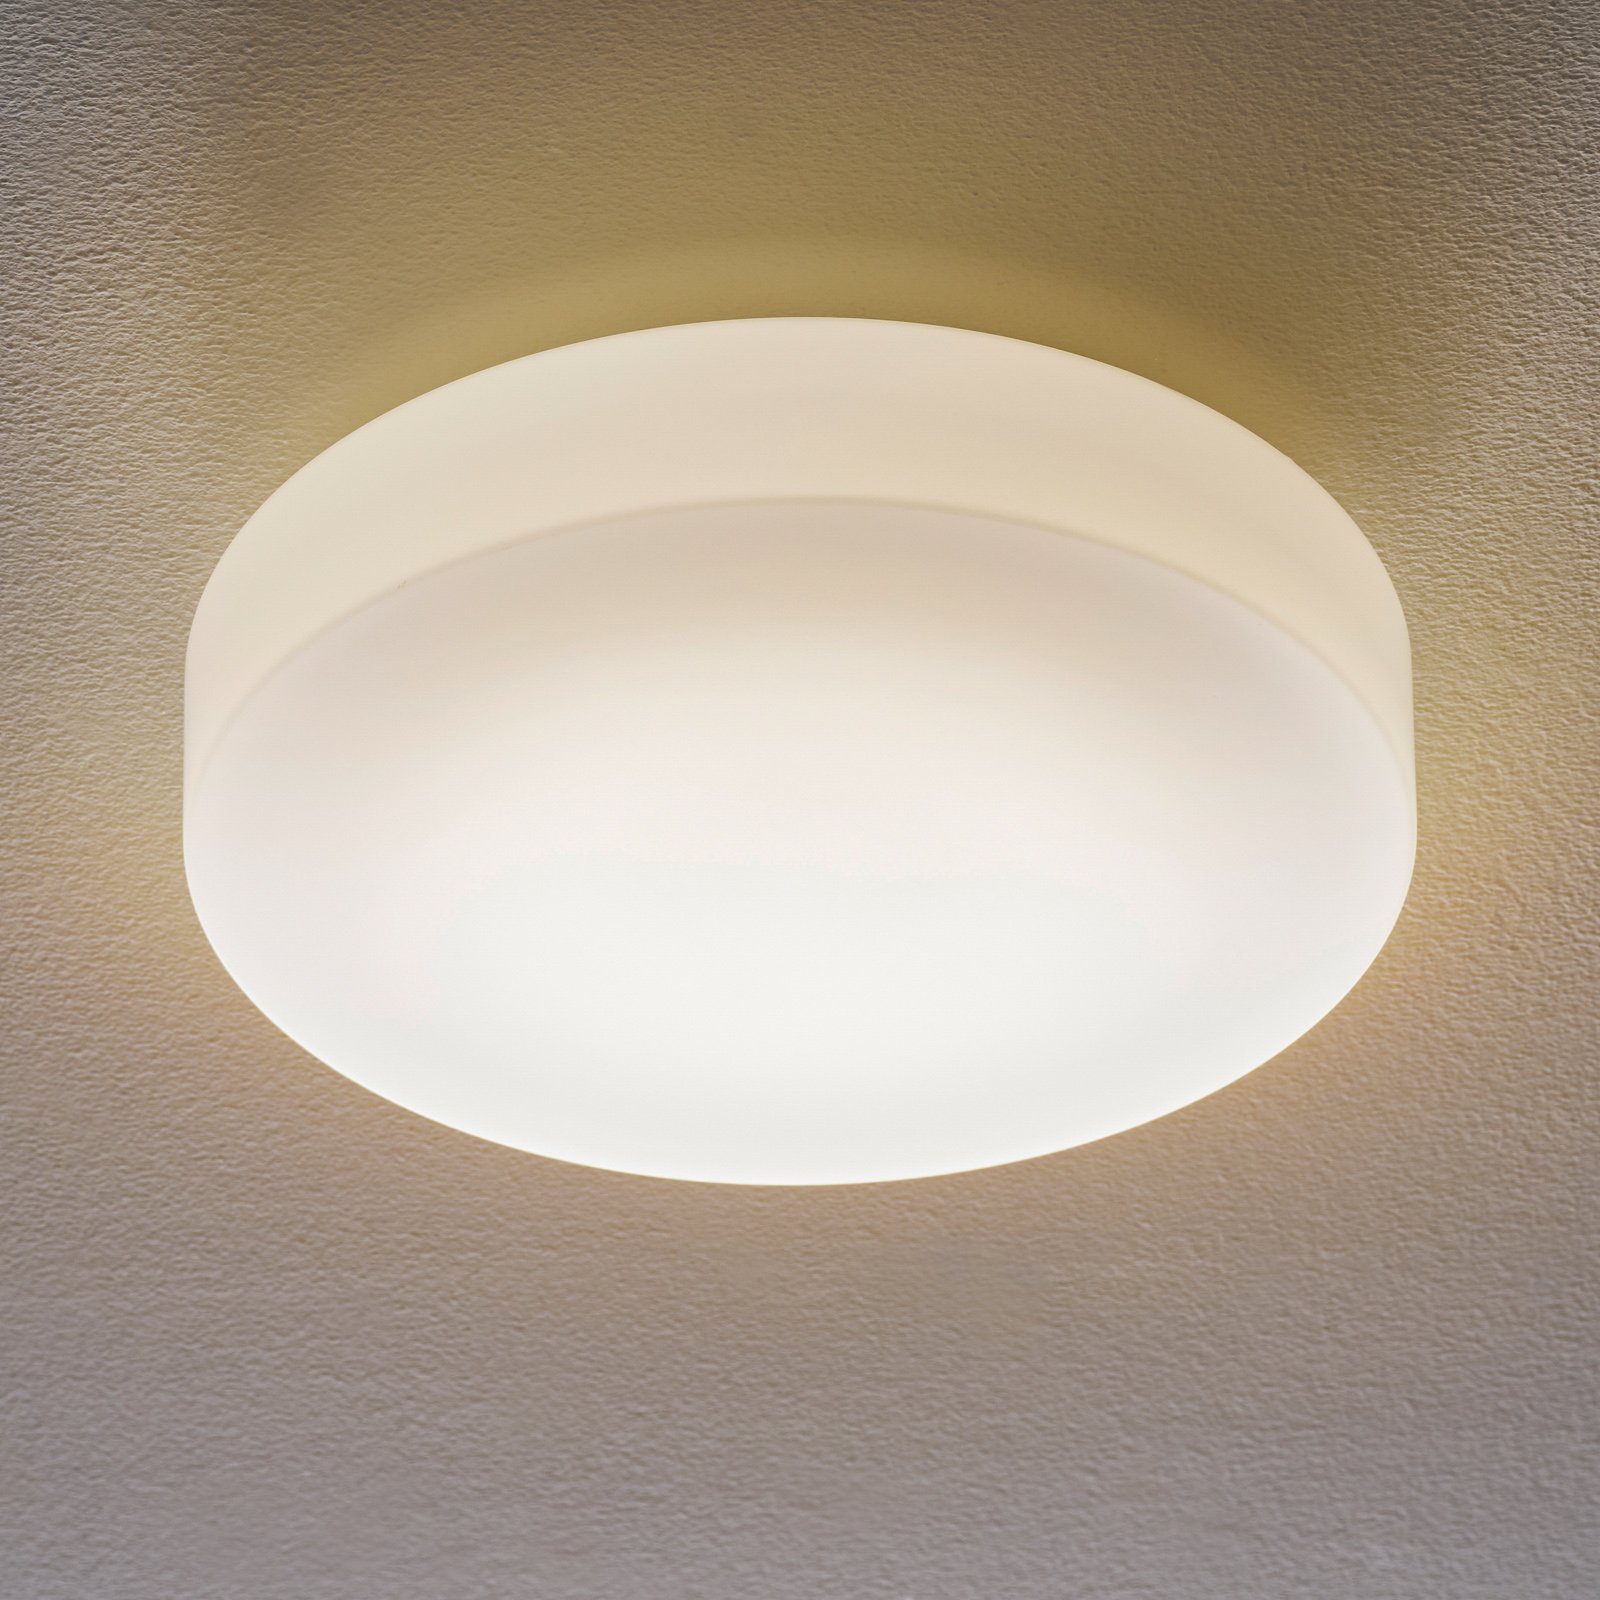 BEGA 50651 LED-taklampe opalglass 3 000 K Ø34cm